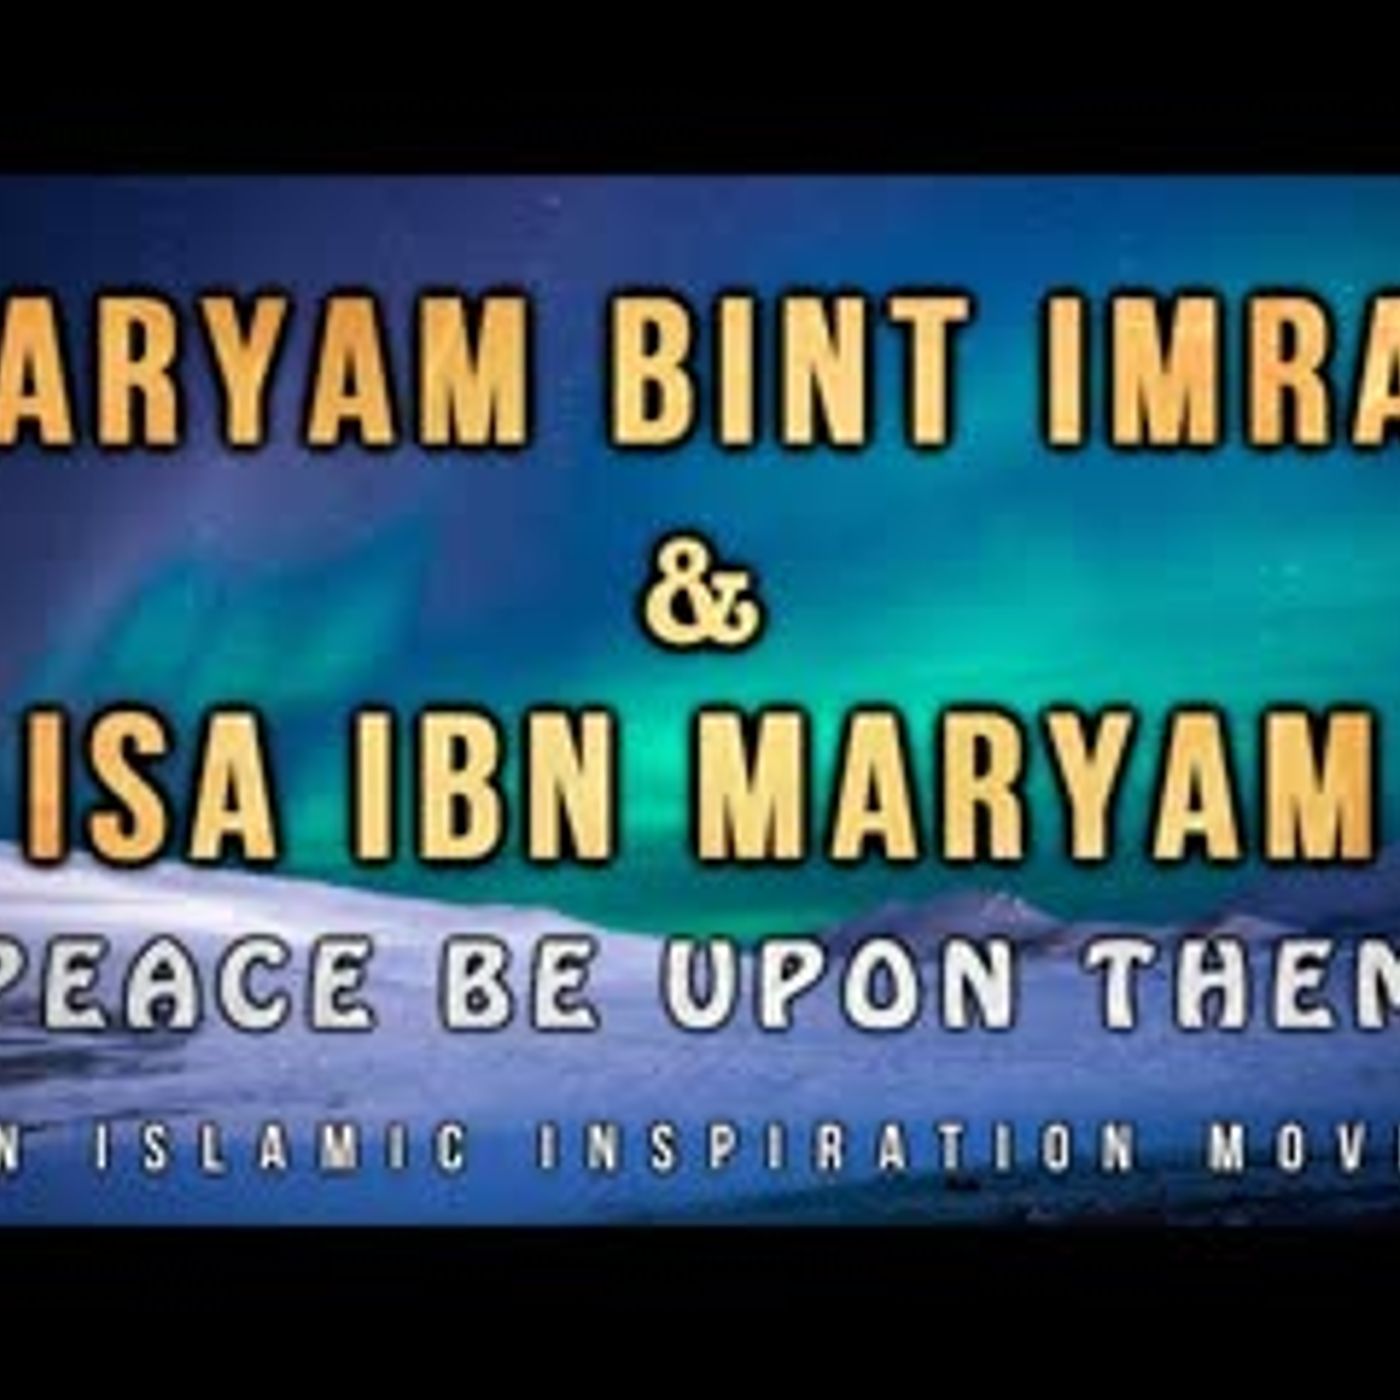 [BE046] The Story Of Maryam Bint Imran (Mary) & Isa Ibn Maryam (Jesus Christ) [Peace Be Upon Them]